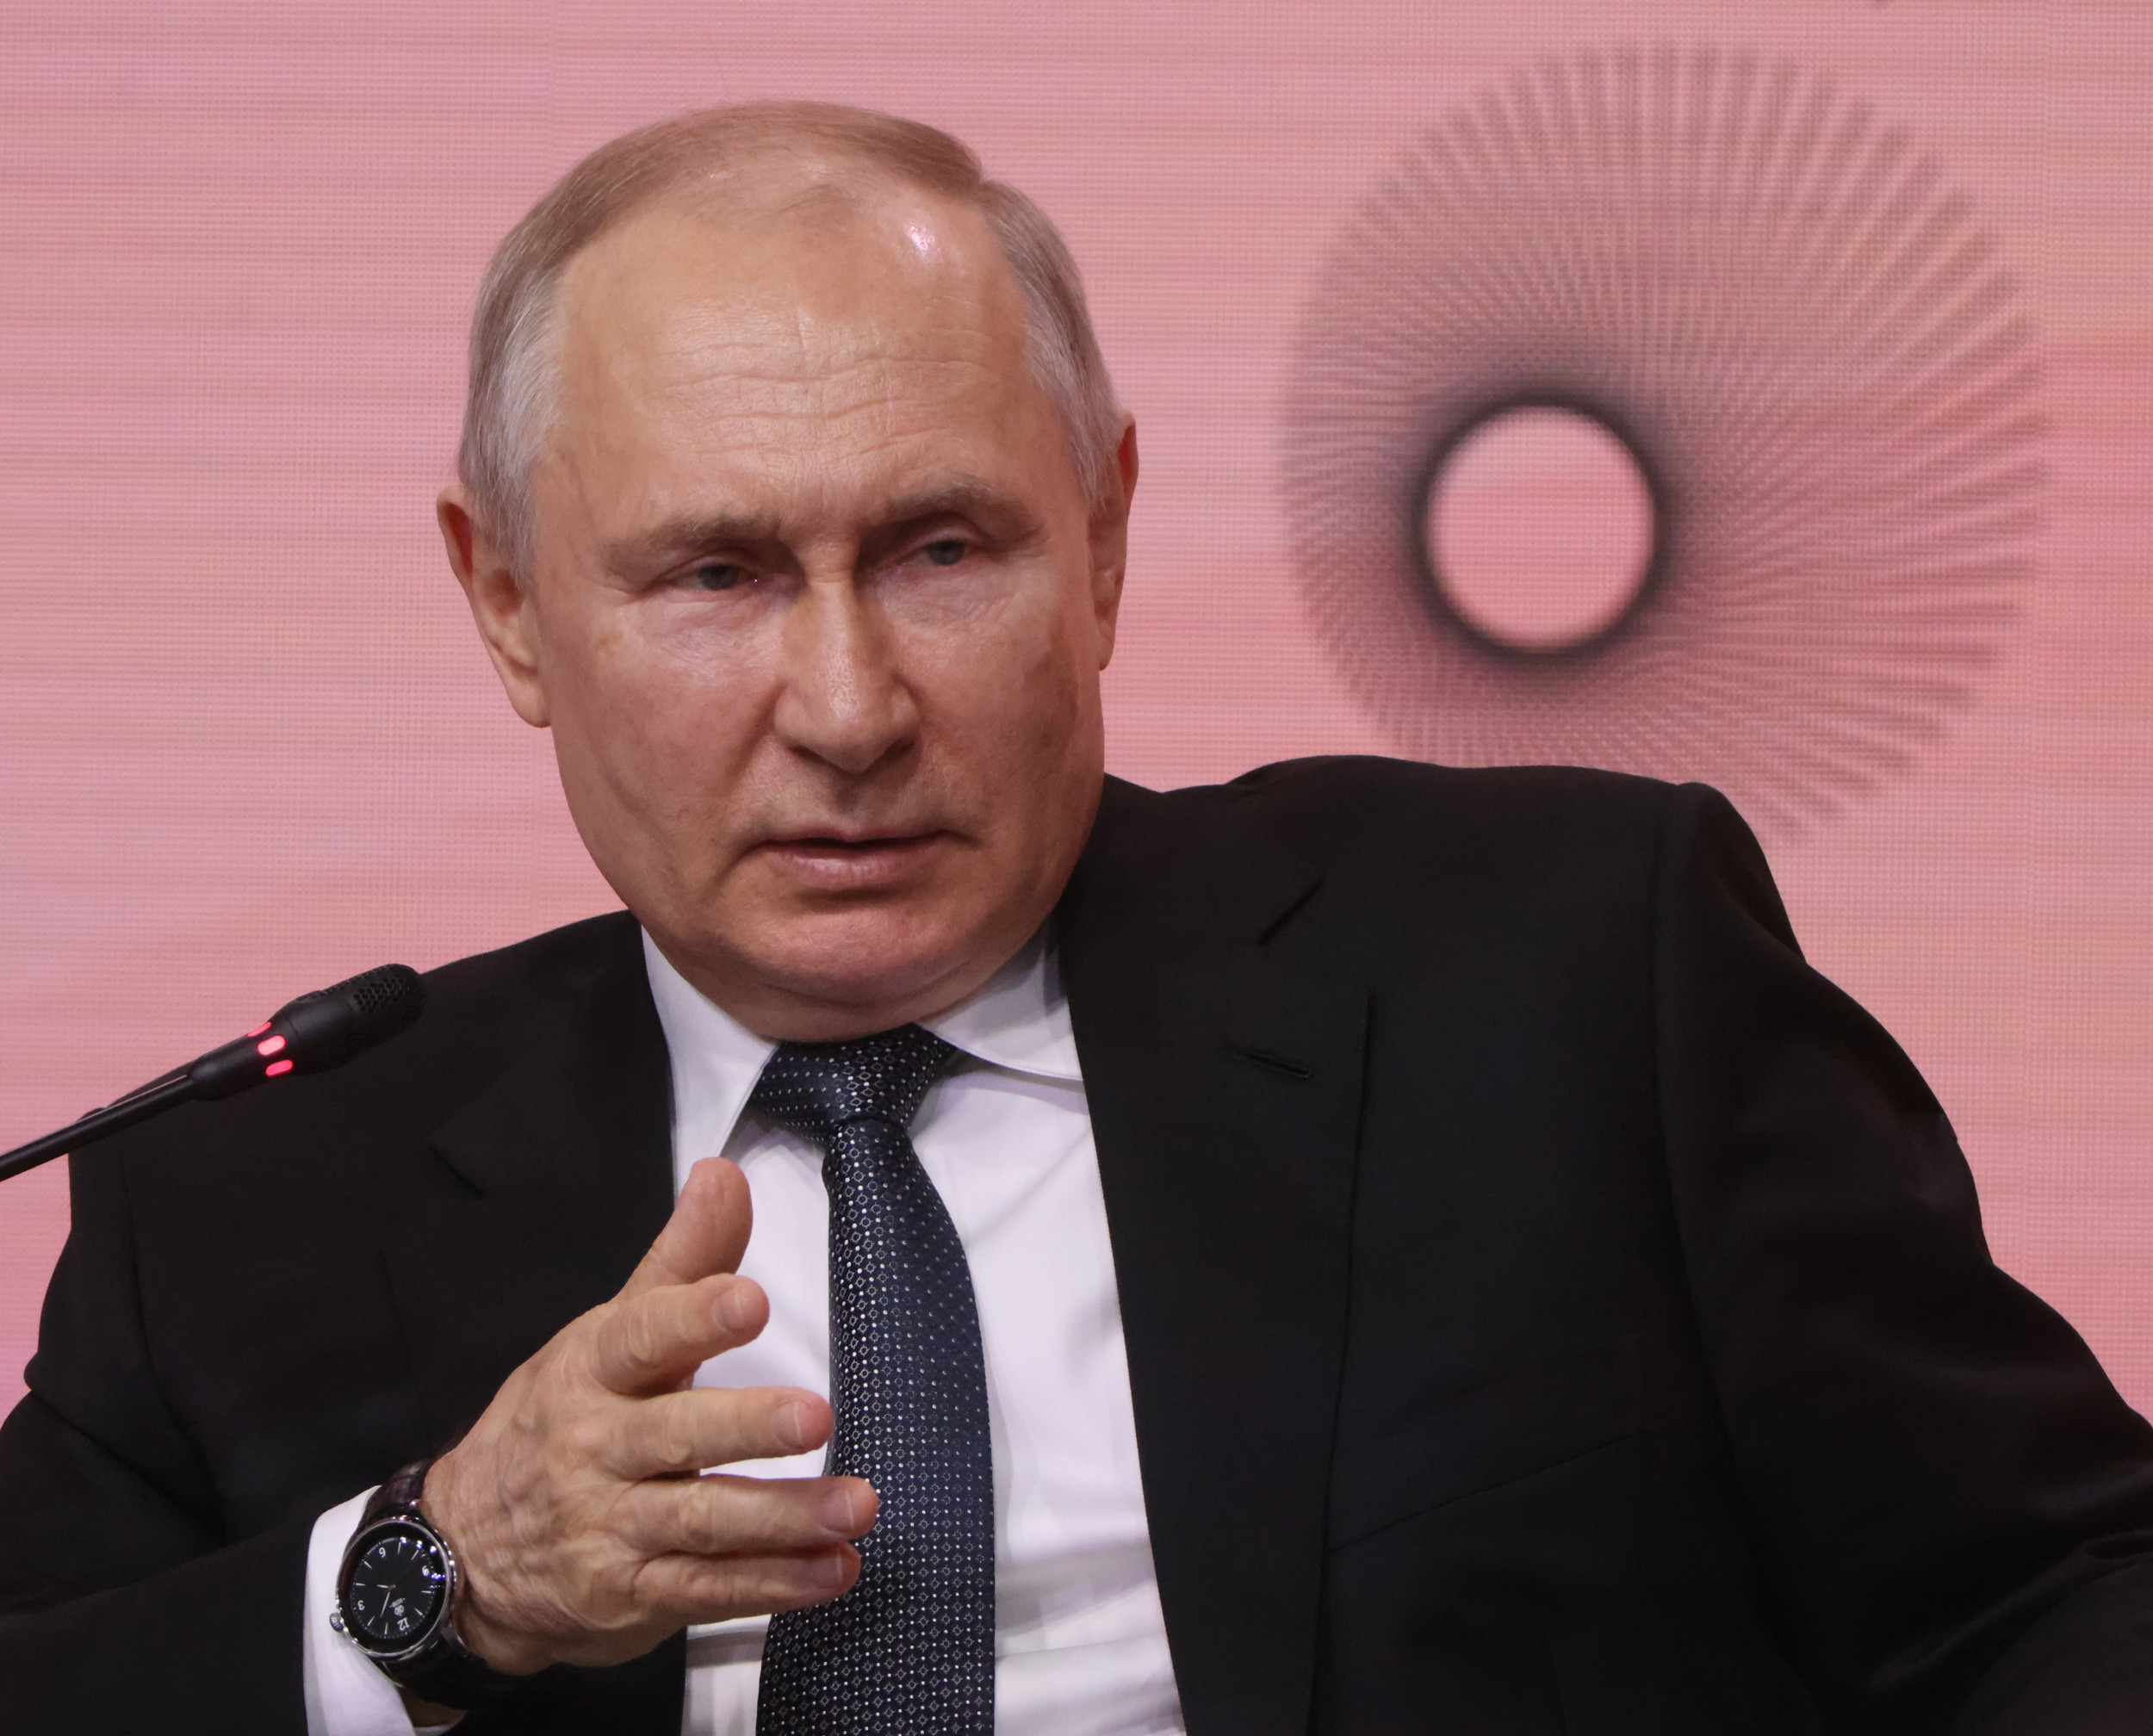 Putin “probably not done” with Prigozhin yet, ex-ambassador warns